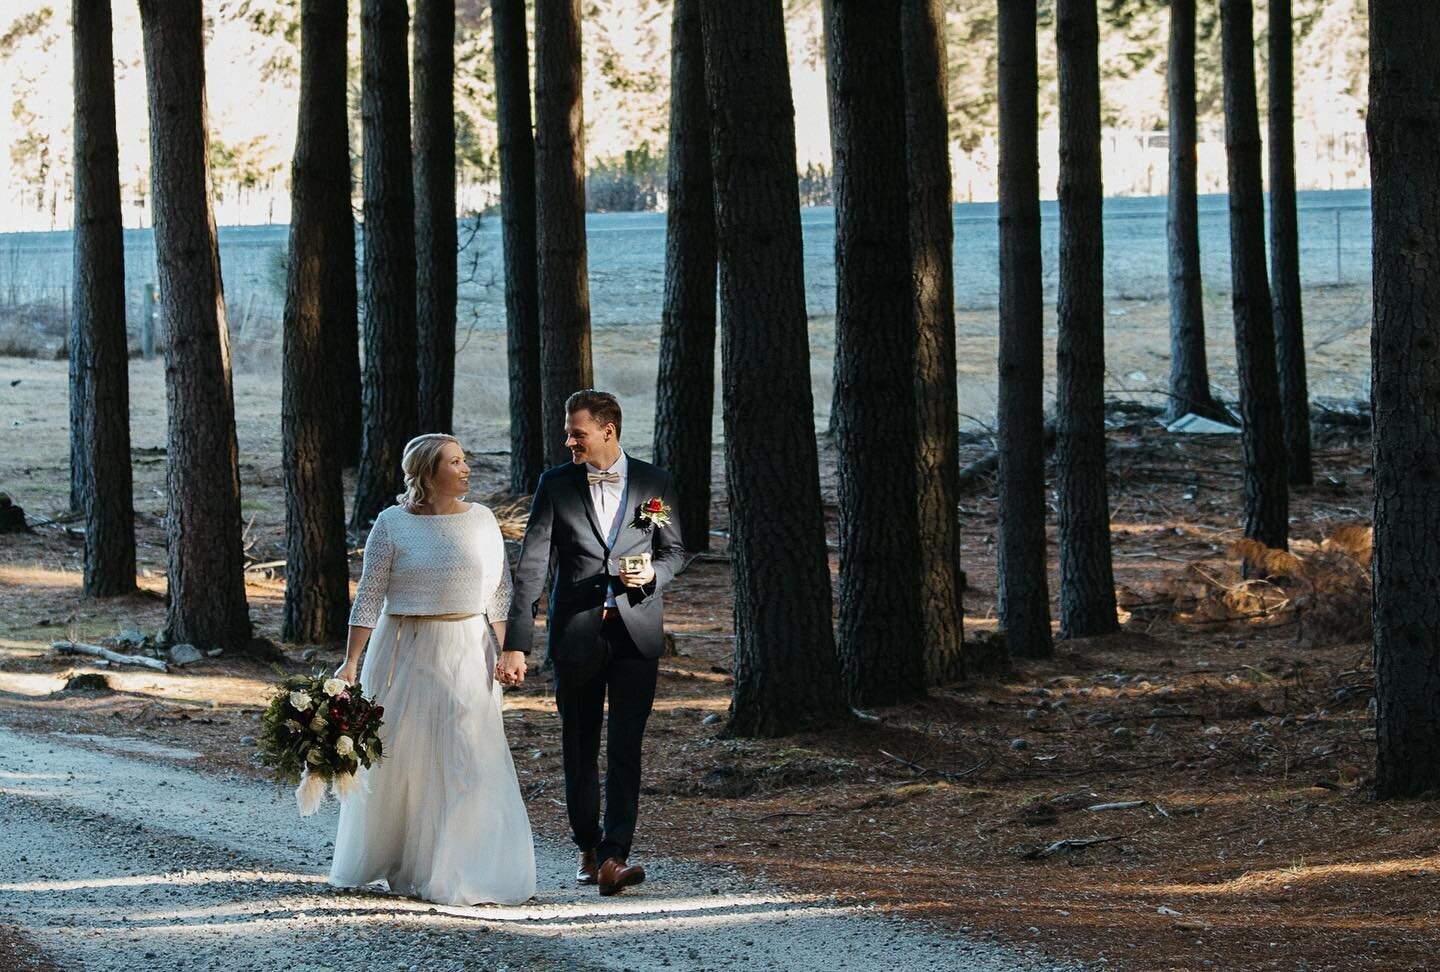 REMINISCING  Winter weddings make for some stunning lights. ❄️
📸 @katealexandraphotograpgh 
-
-
-
#wanakaweddingflowers #wanakaweddingflowersfloristandstyling #purenzweddings #destinationweddings #simplyweddings #nzweddings #elopingweddings #elopeme